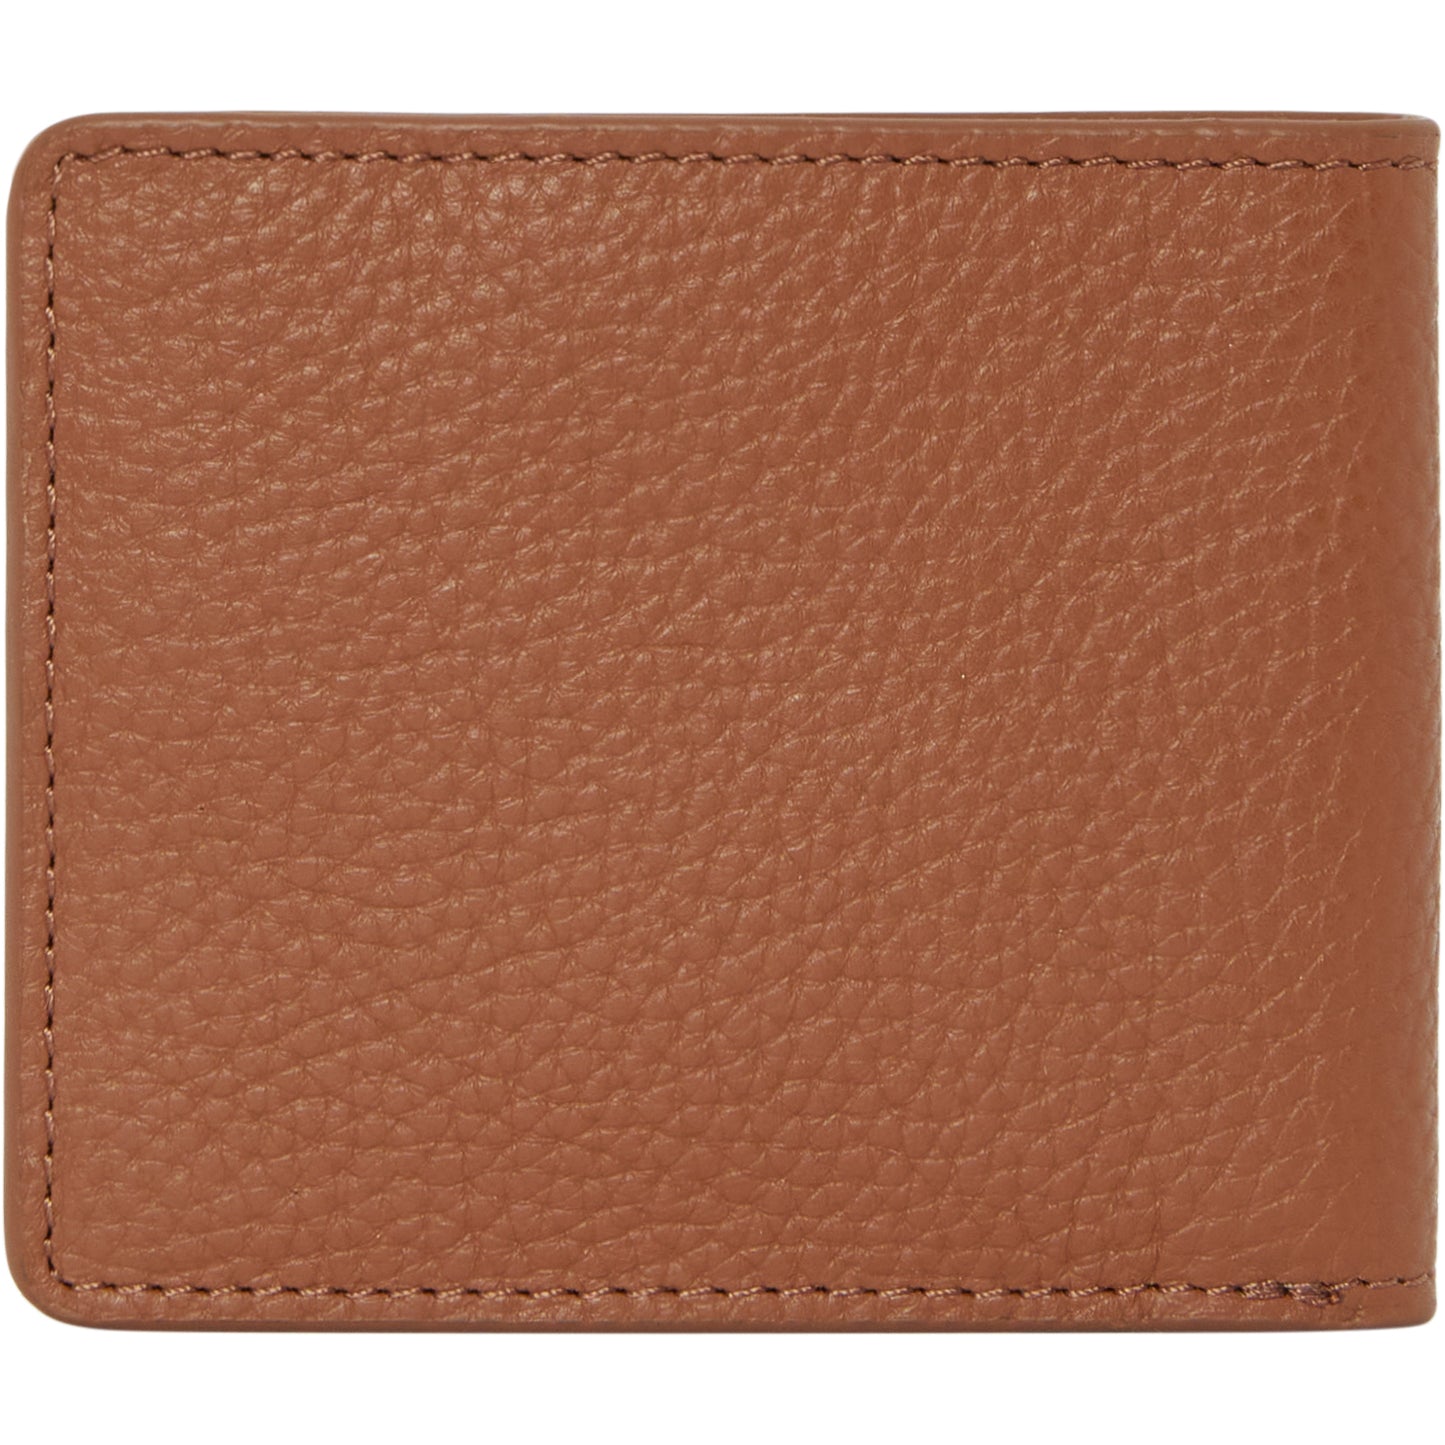 Men's Tan Leather Wallet